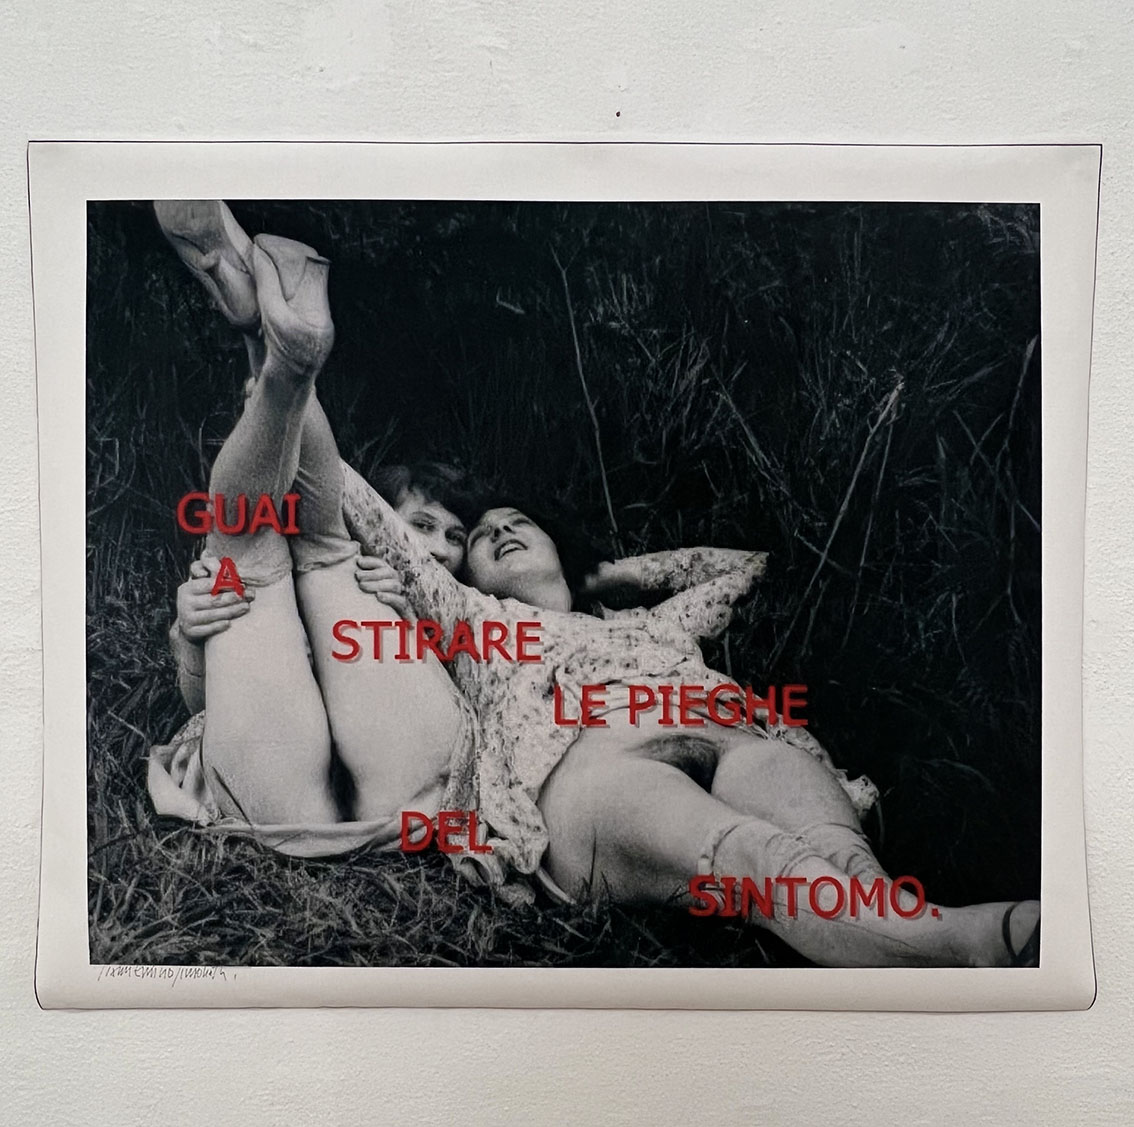 Gianni-Emilio Simonetti Sharevolution Contemporary Art Genova